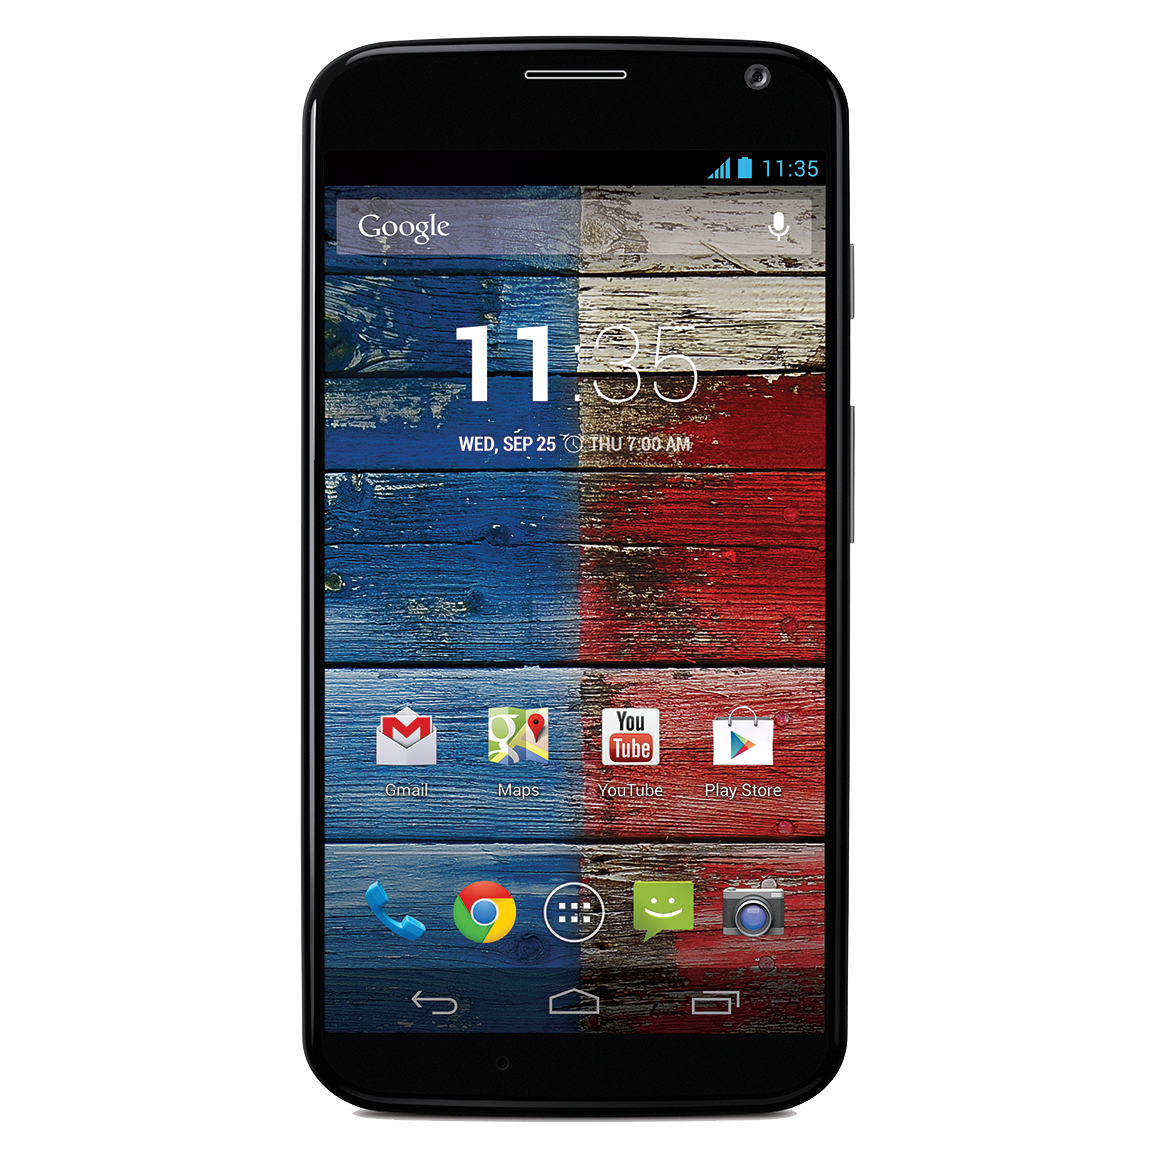 Google Officially Unveils the Motorola Moto X Smartphone [Video]